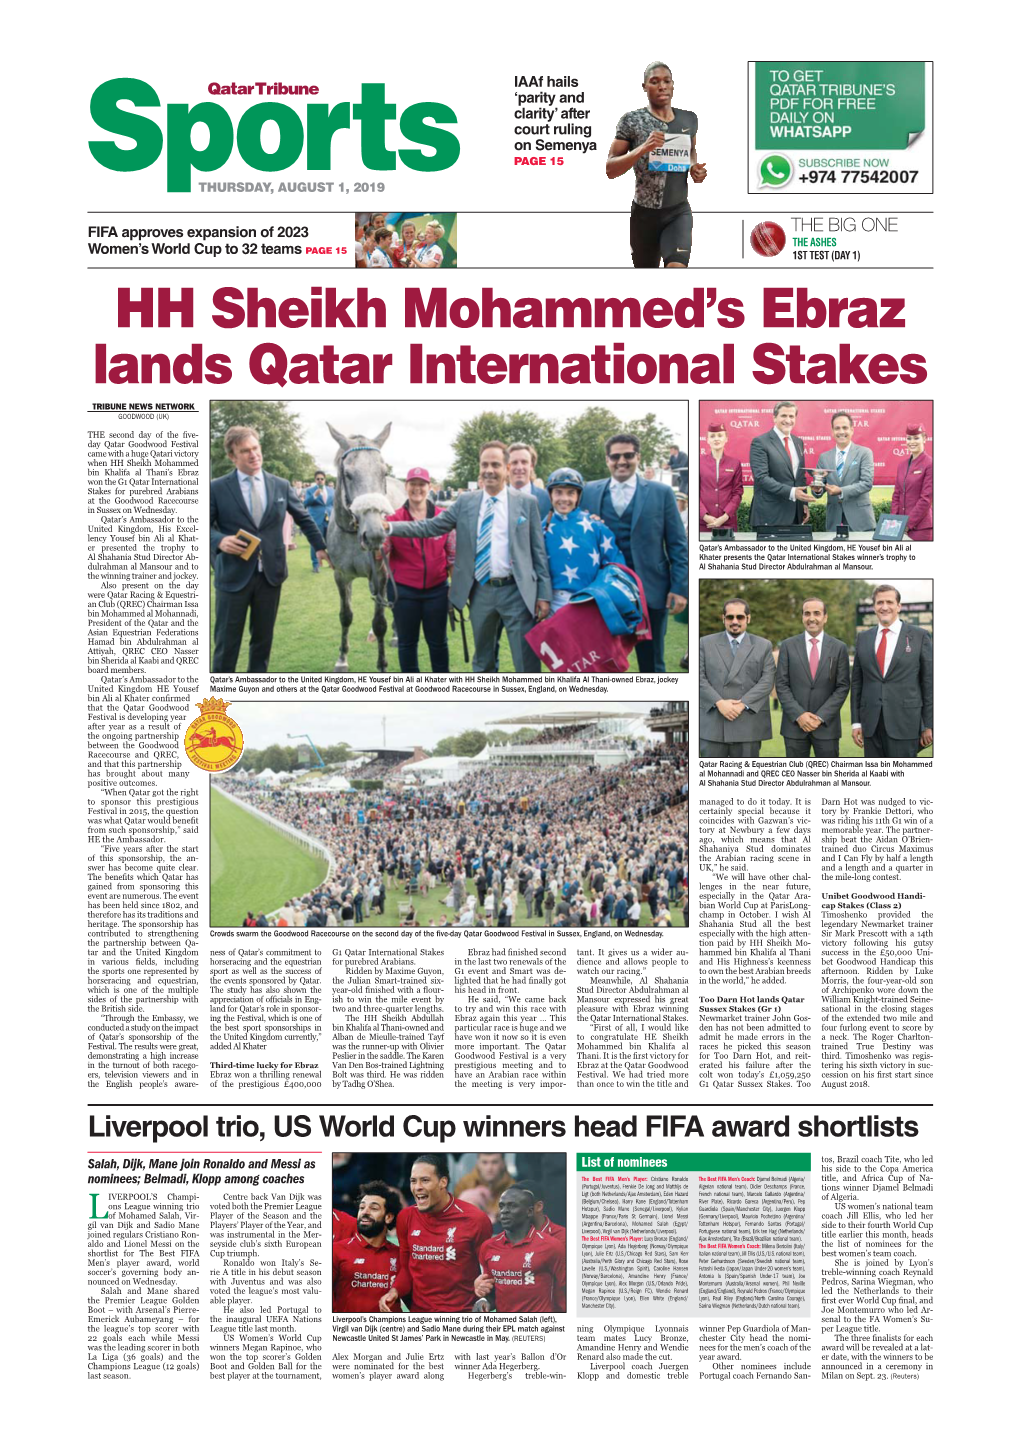 HH Sheikh Mohammed's Ebraz Lands Qatar International Stakes